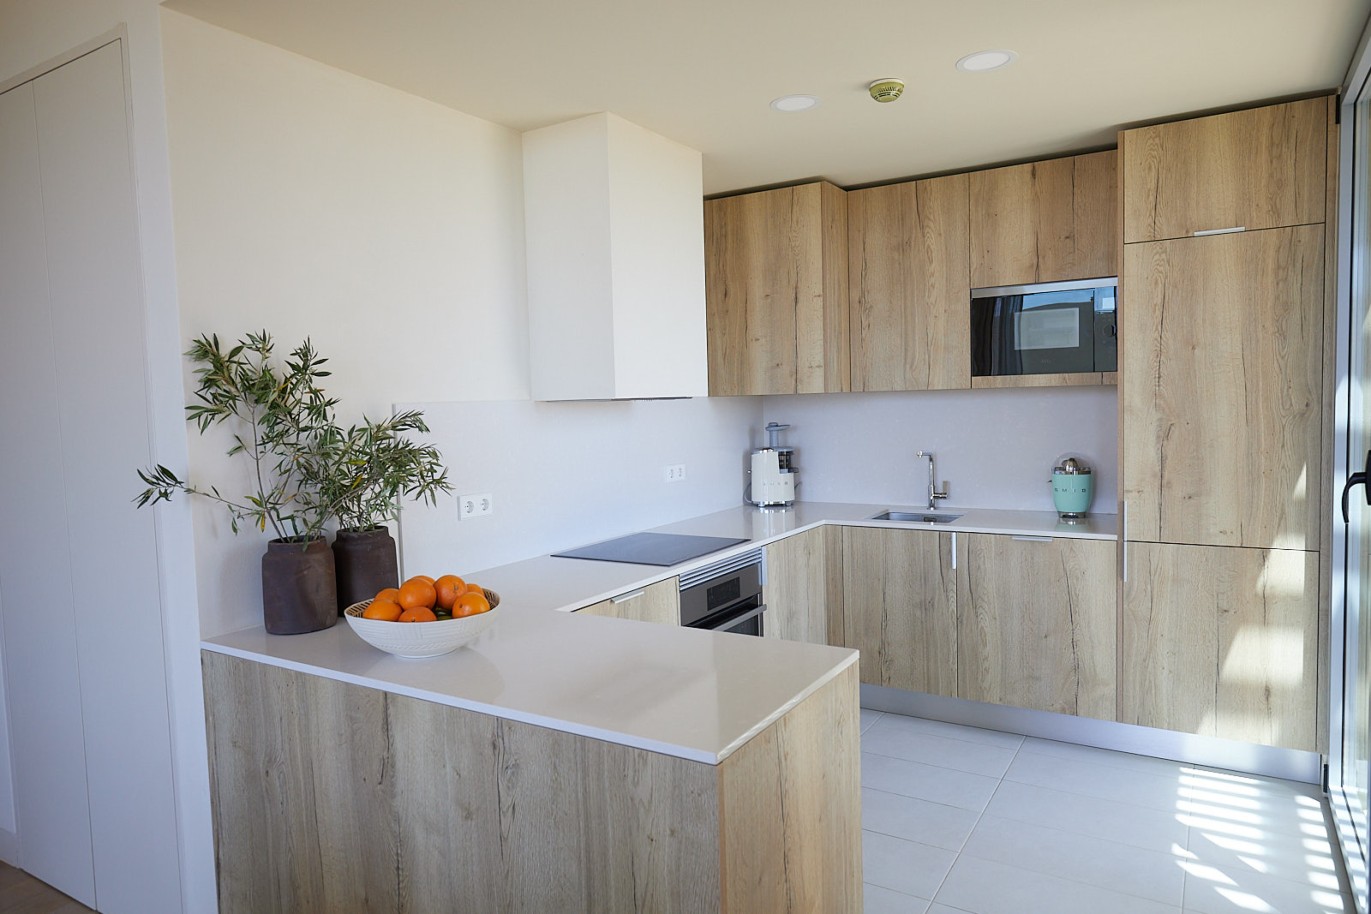 2 bedroom apartment in resort, for sale in Porches, Algarve_228898